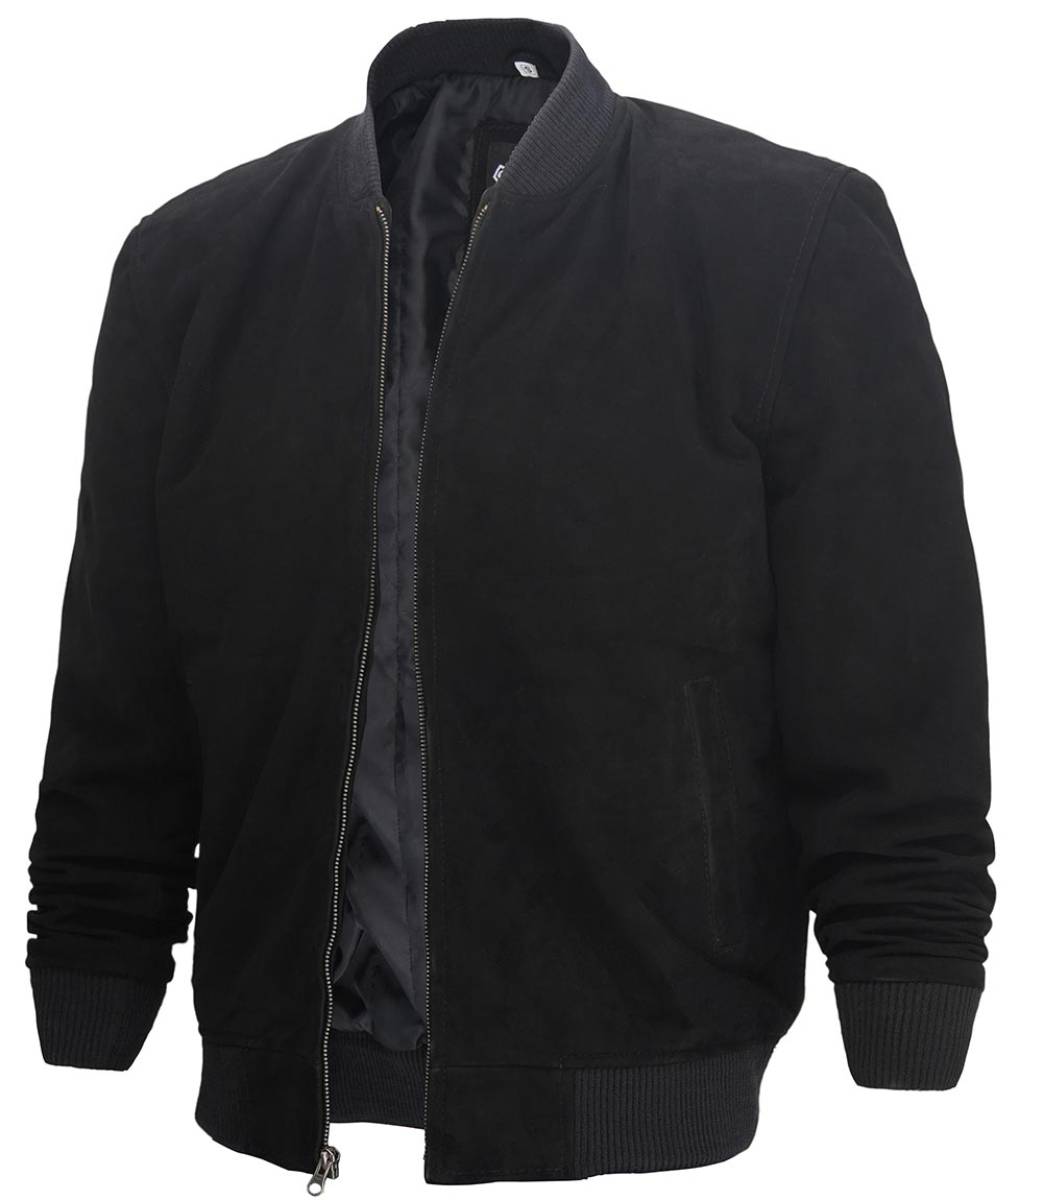 Mens Suede Leather Black Bomber Jacket - Suede Leather Jacket